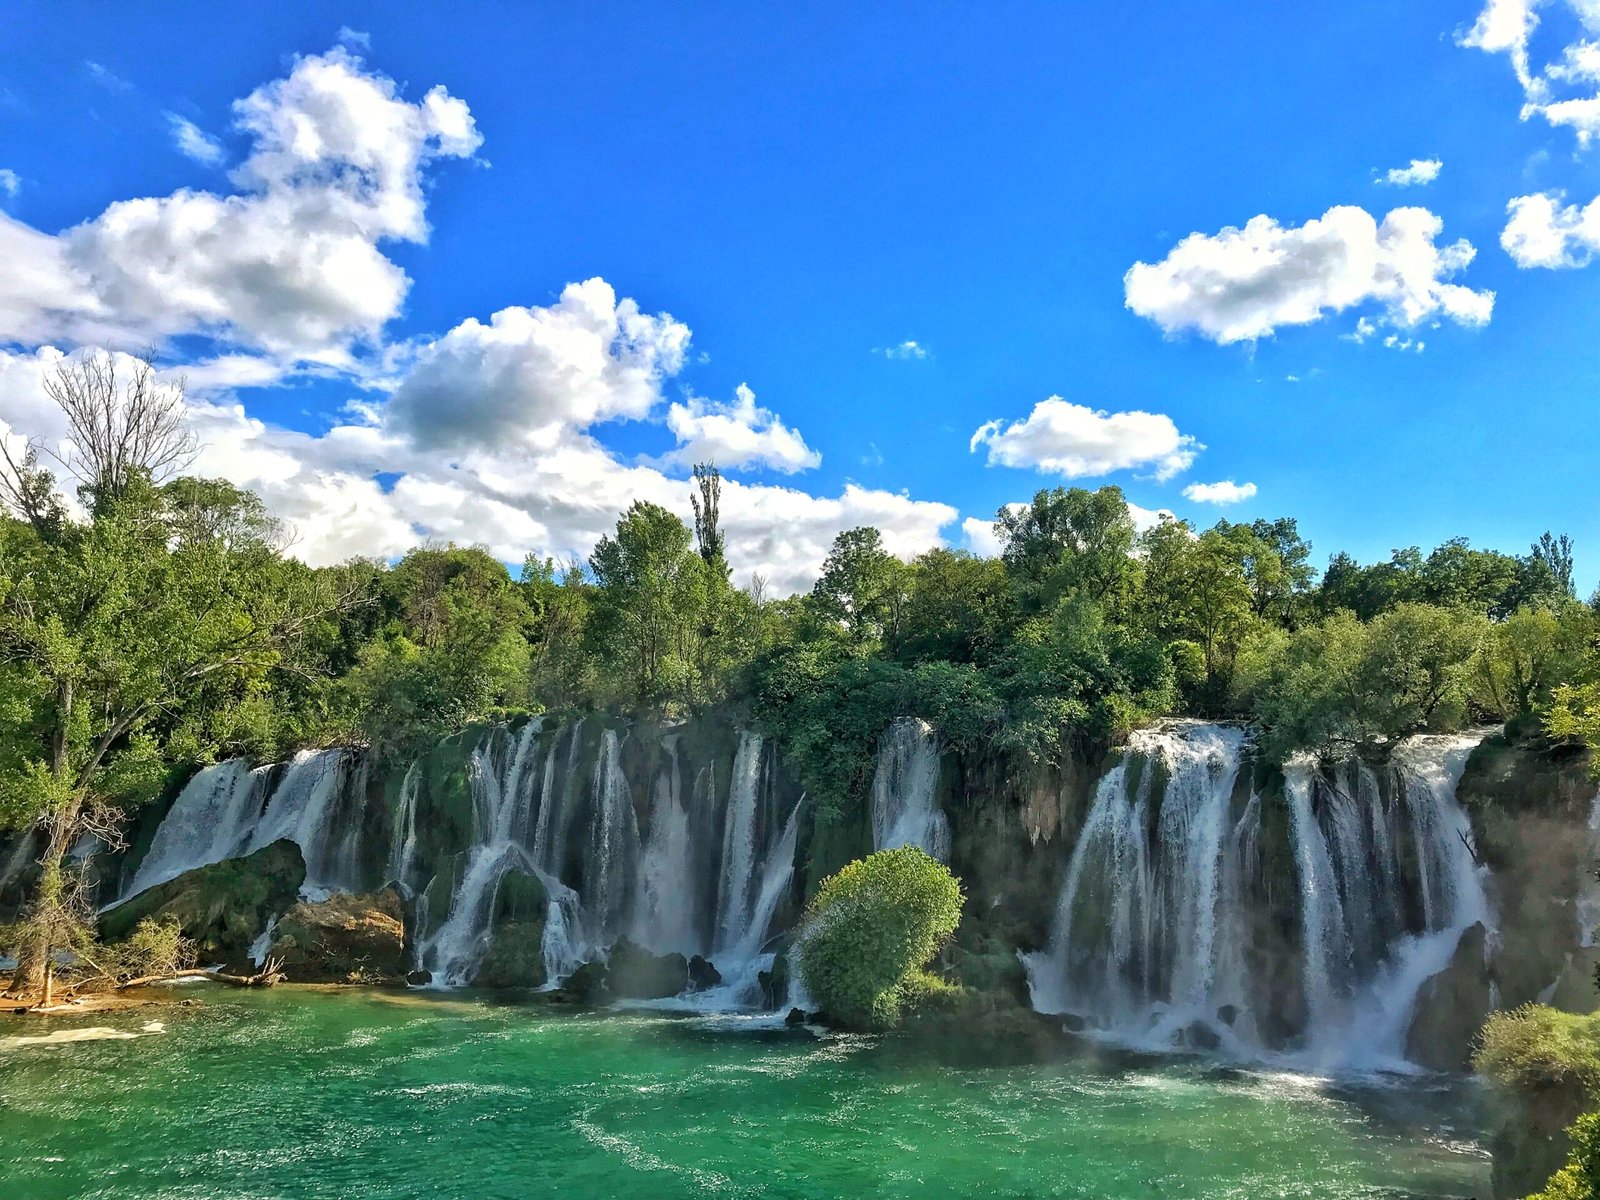 Kravica waterfalls greenery